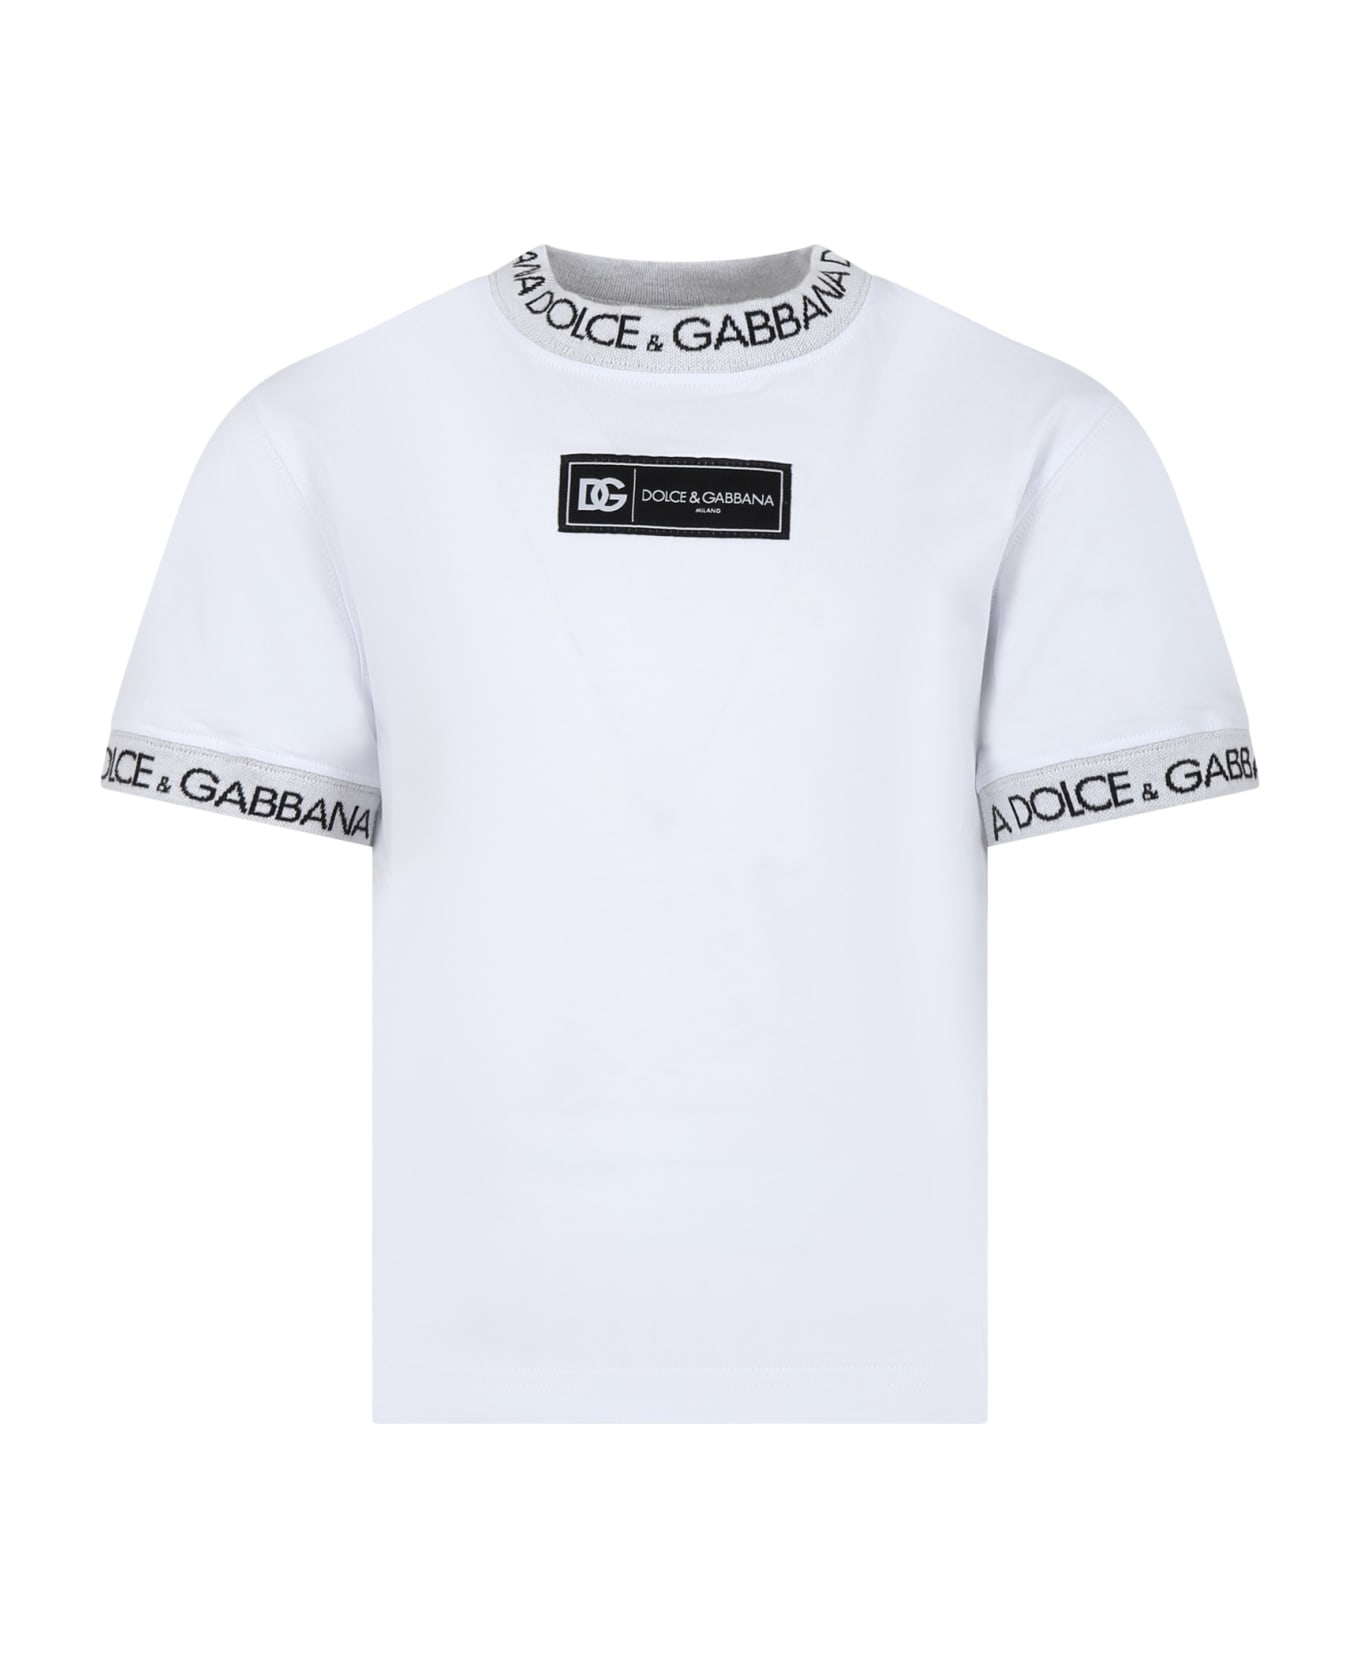 Dolce & Gabbana White T-shirt For Kids With Logo - White